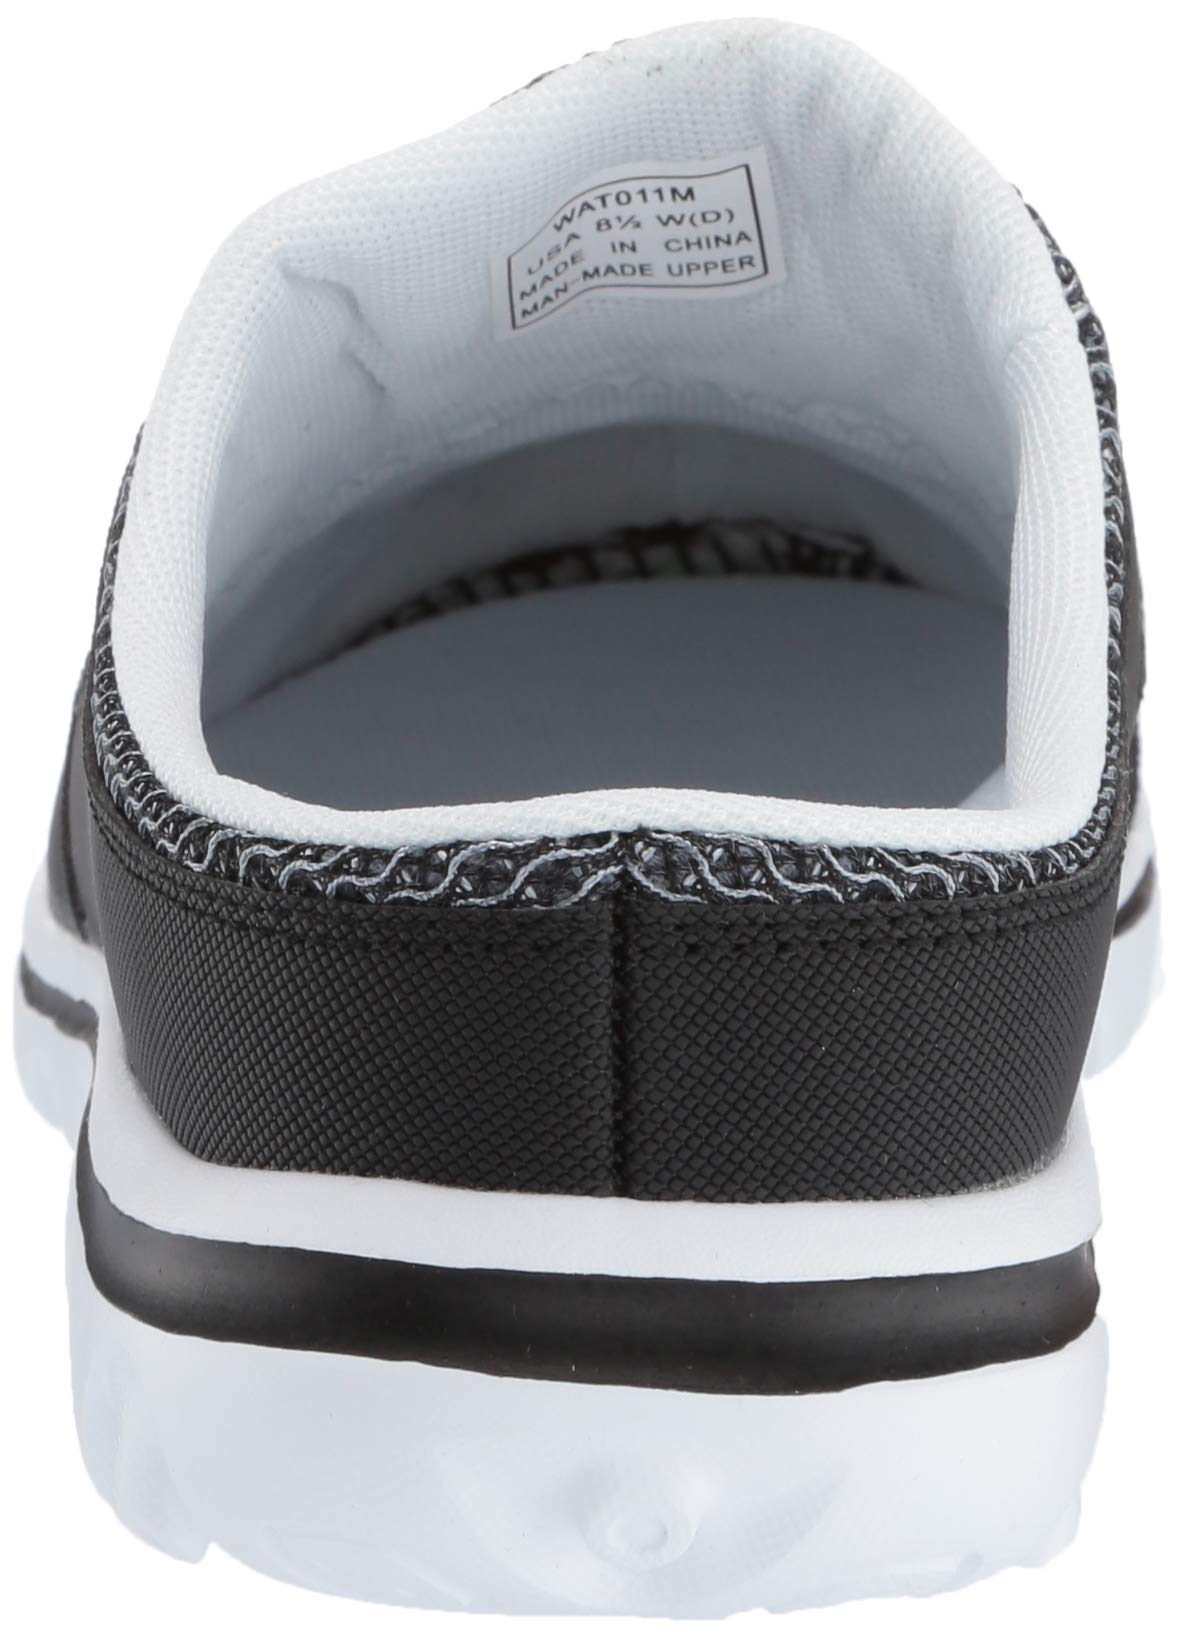 Propet Womens TravelActiv Slide Mule Sneakers Casual Shoes Casual - Black